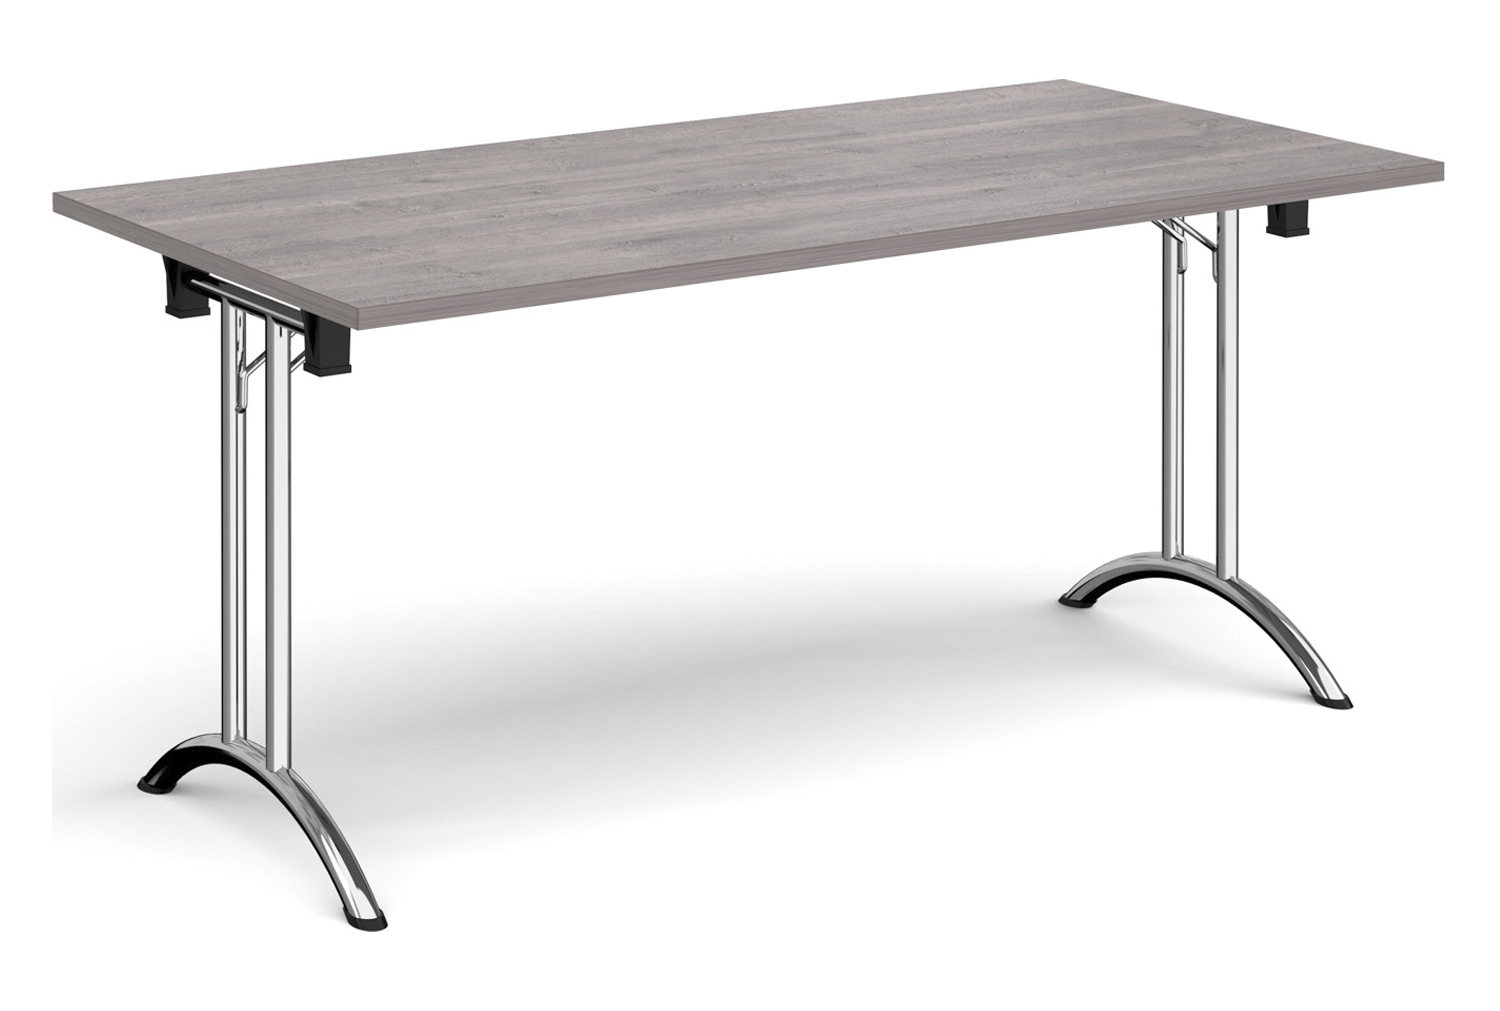 Zeeland Rectangular Folding Table, 160wx80dx73h (cm), Chrome Frame, Grey Oak, Express Delivery